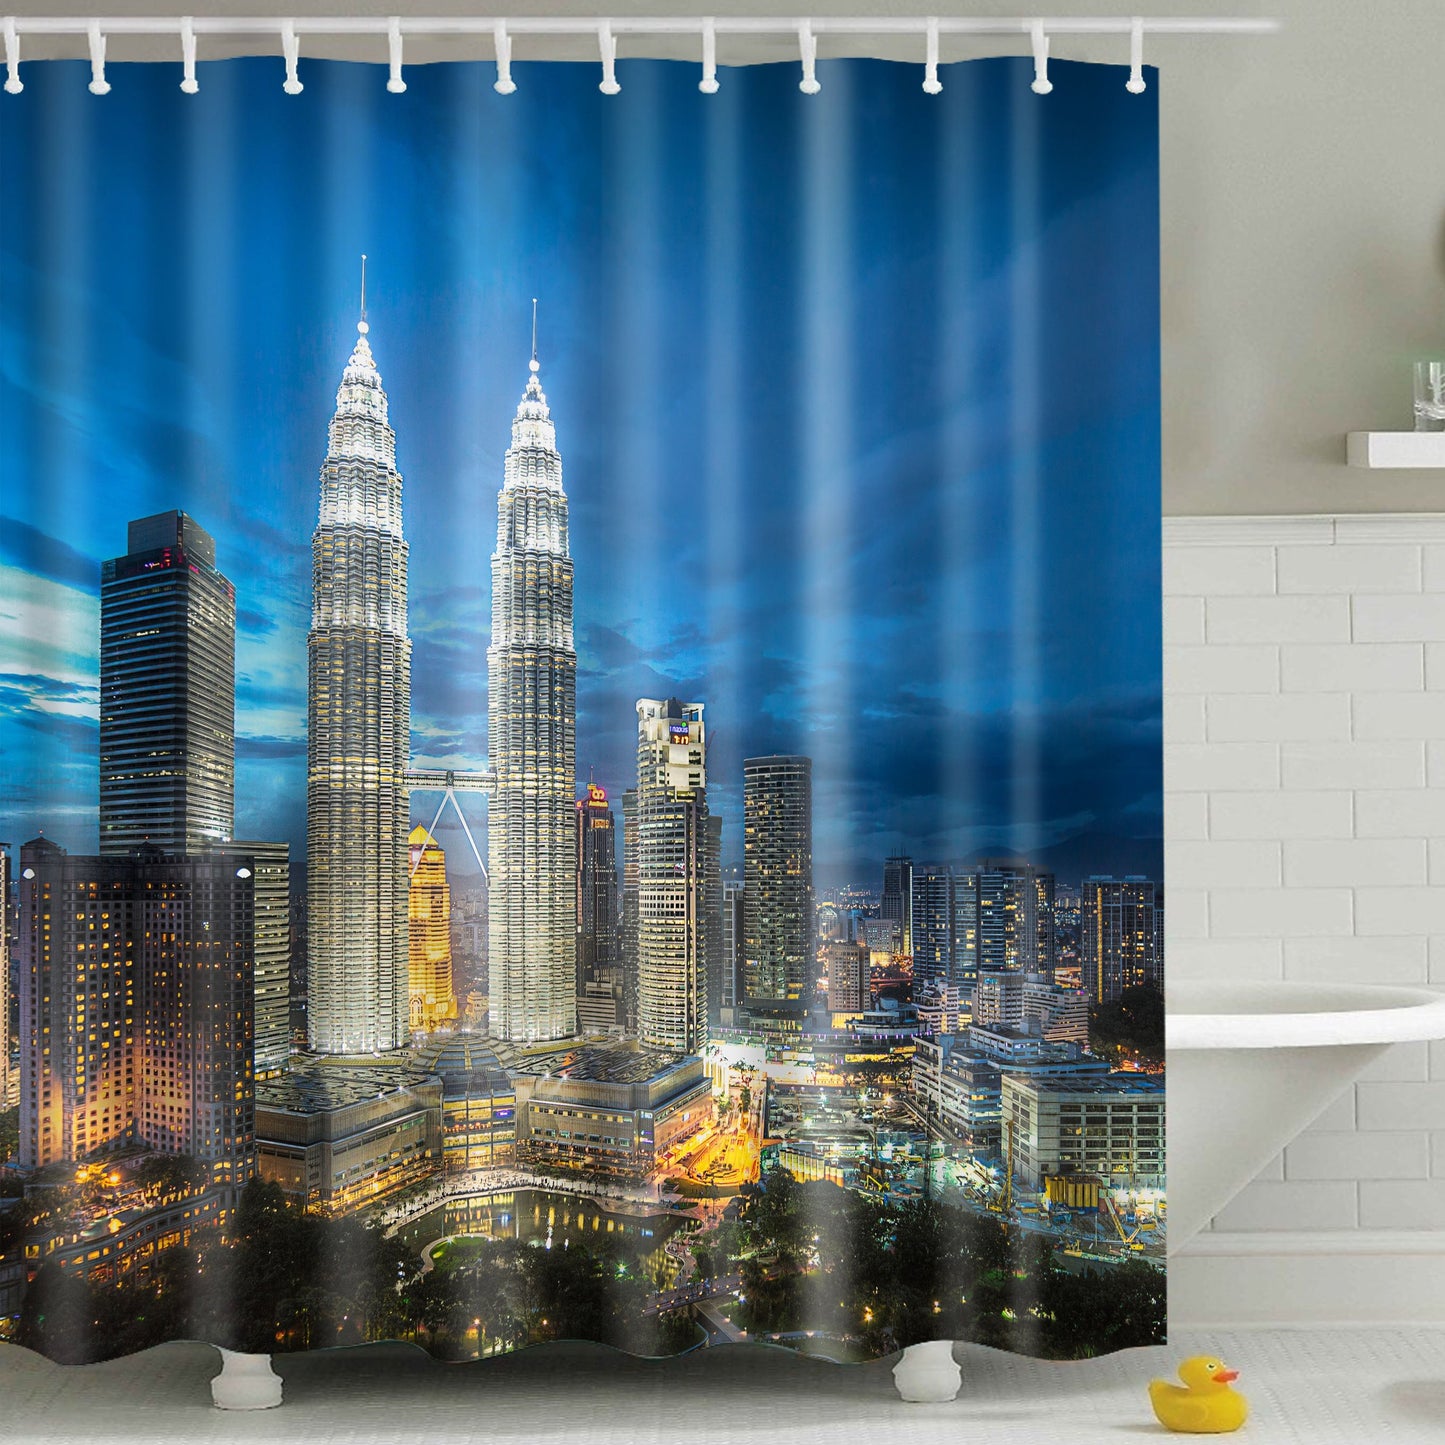 Skyline Building Cityscape Shower Curtain | GoJeek